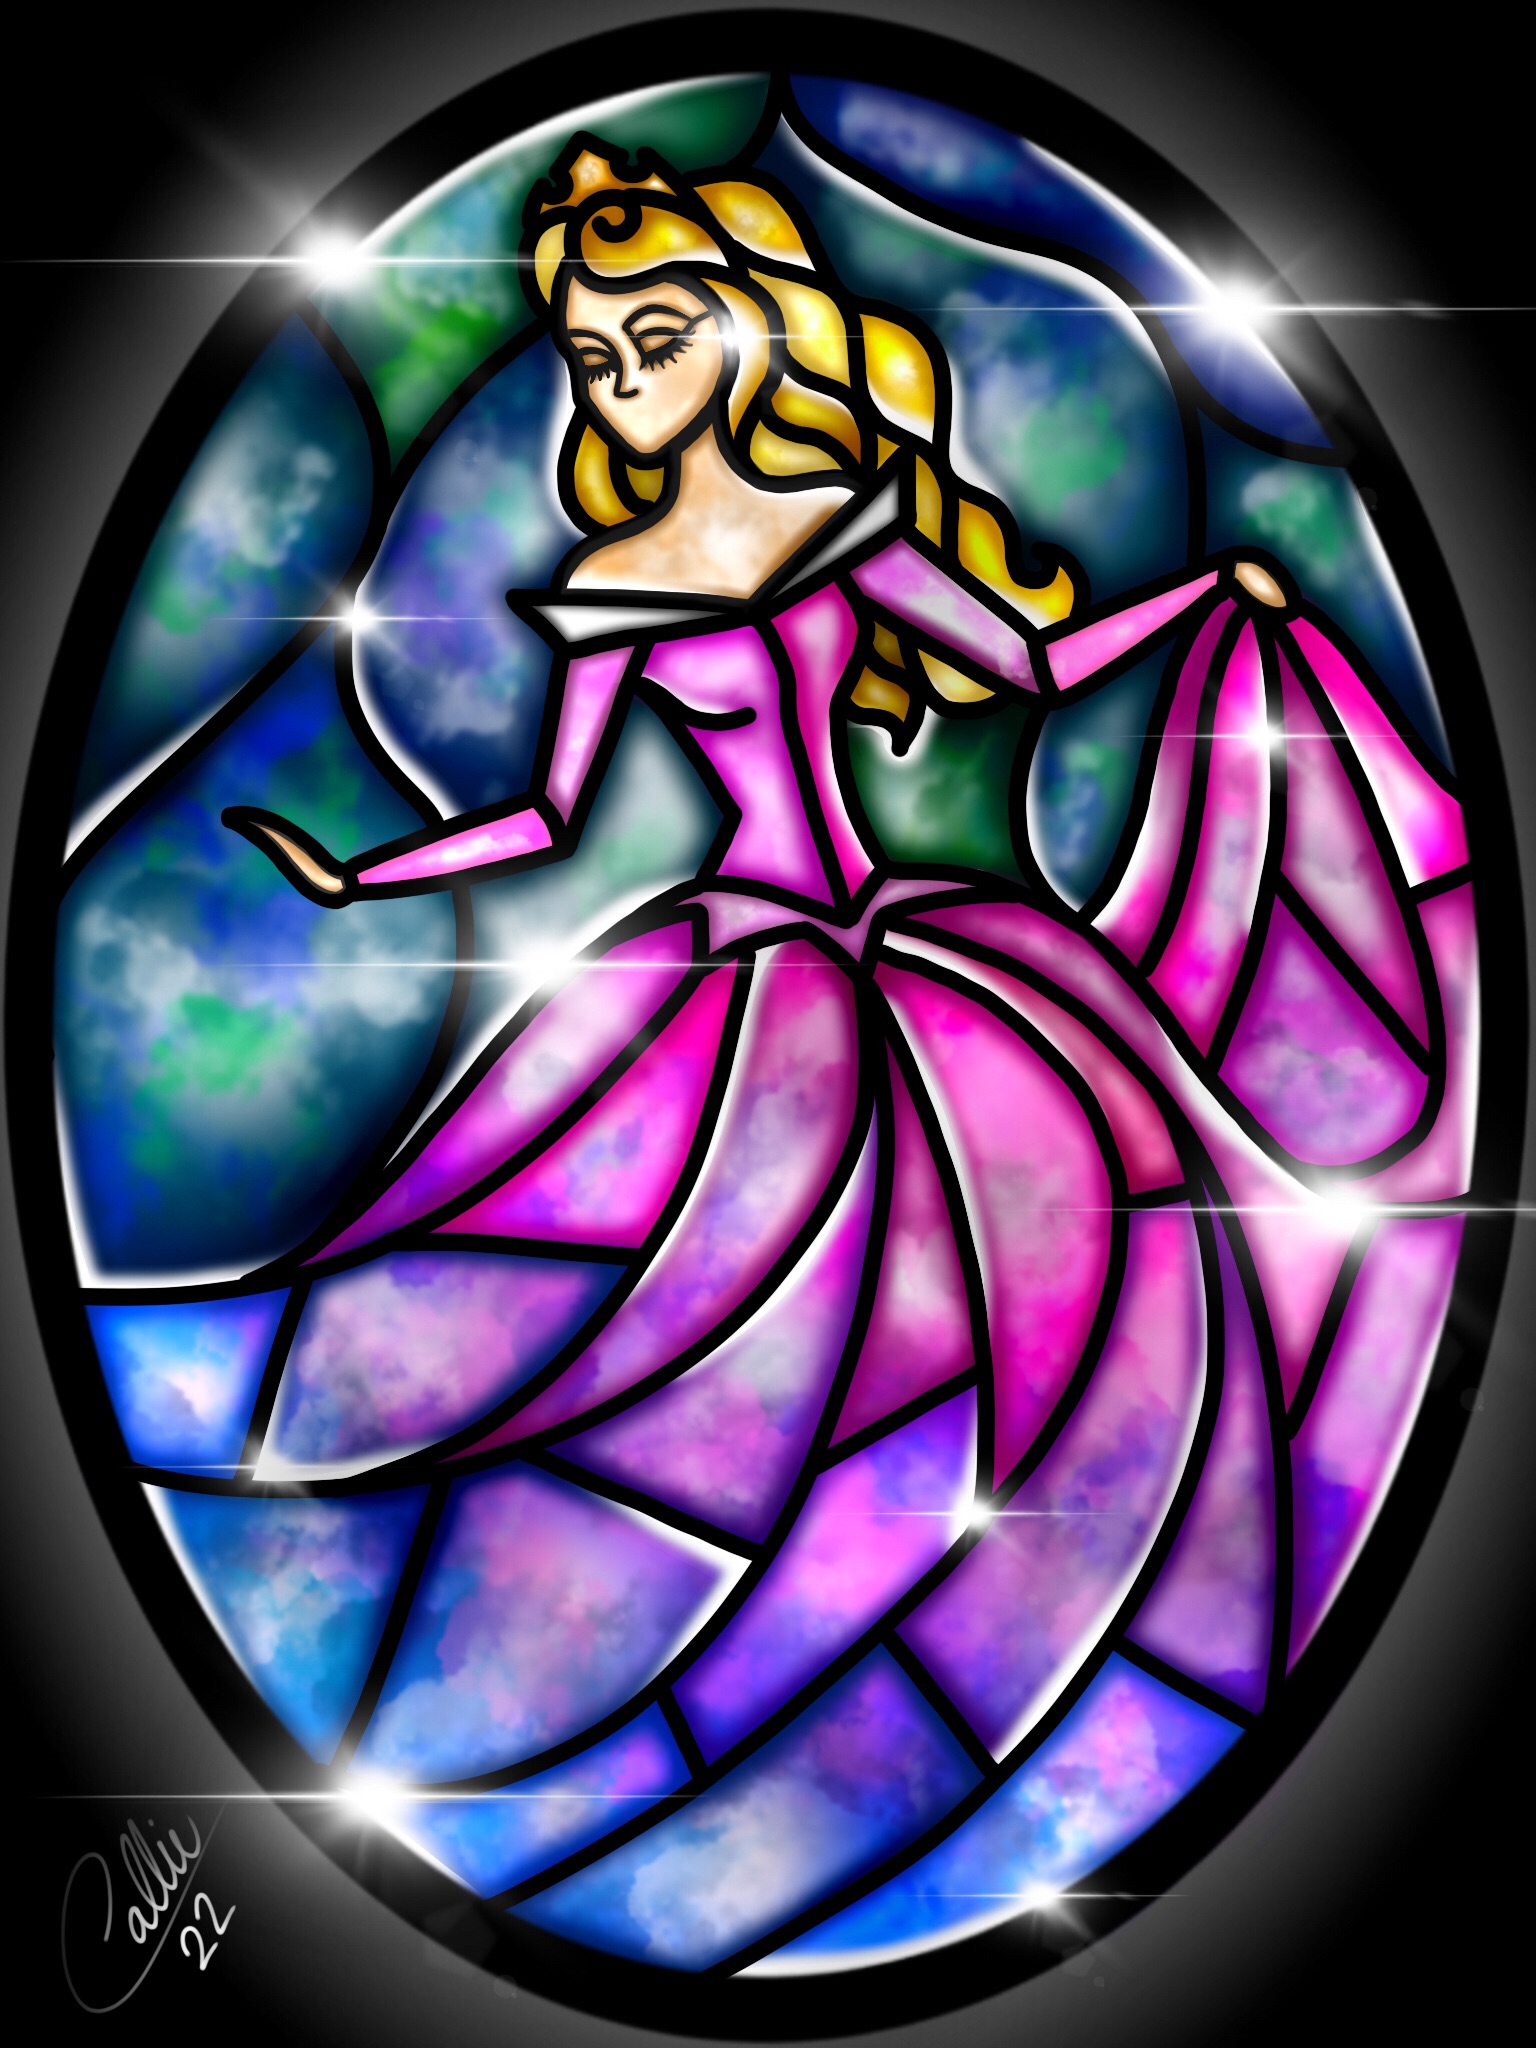 Stained Glass Sleeping Beauty by CallieClara on DeviantArt